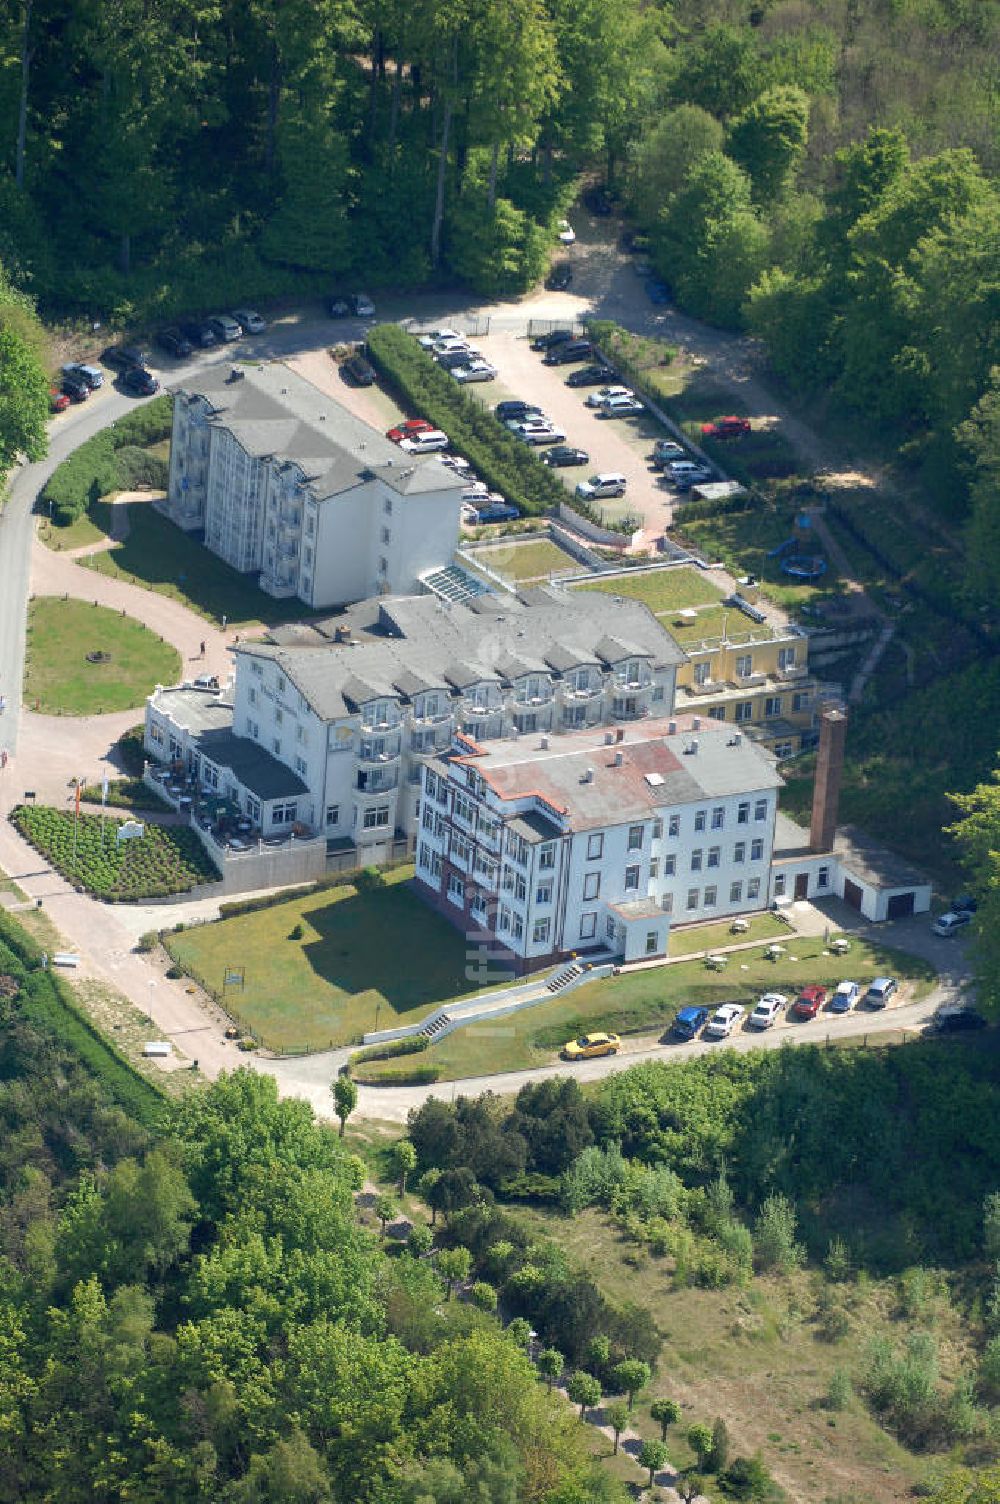 Luftbild Sellin - Blick auf ein Hotel im Ostseebad Sellin auf Rügen